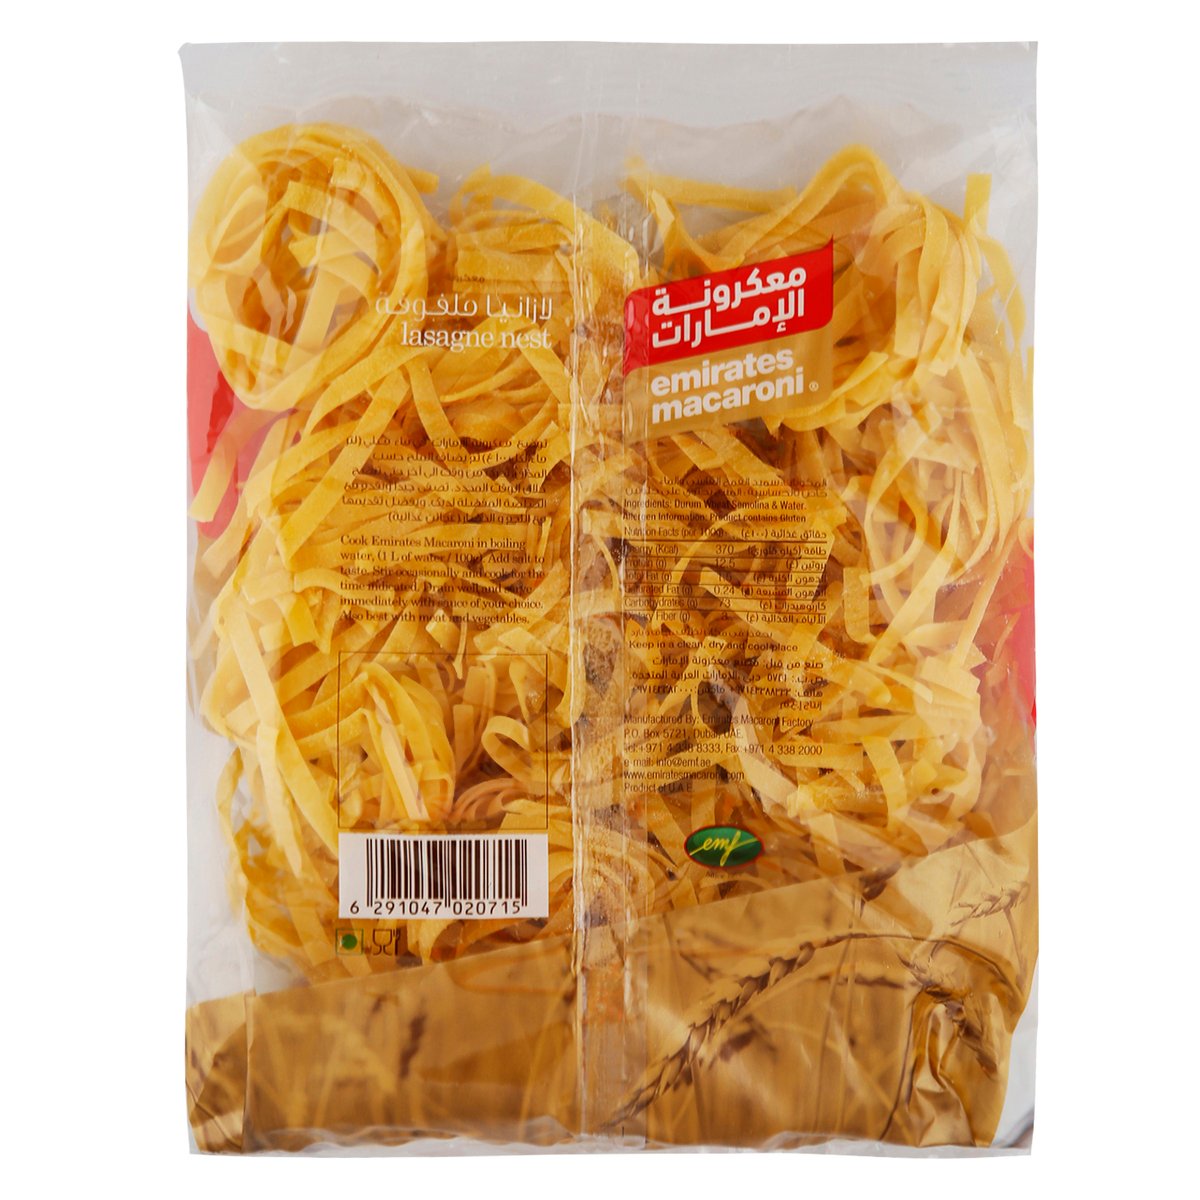 Emirates Macaroni Lasagne Nest 300 g